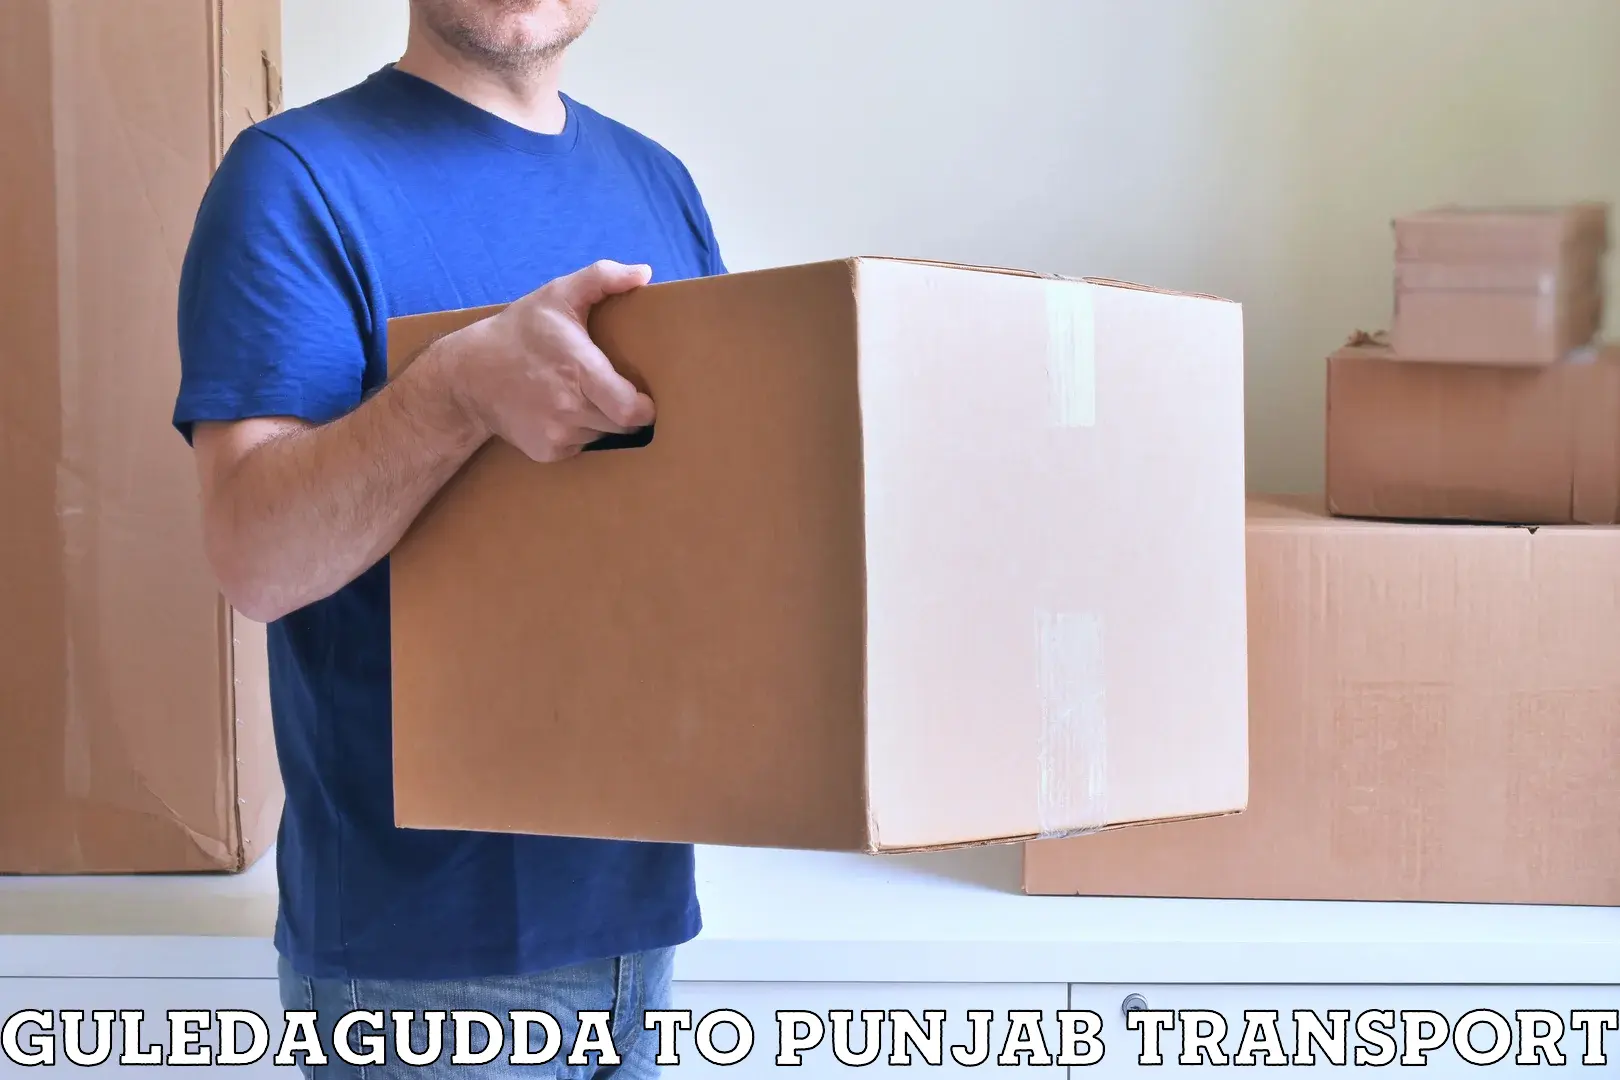 Parcel transport services Guledagudda to Ludhiana